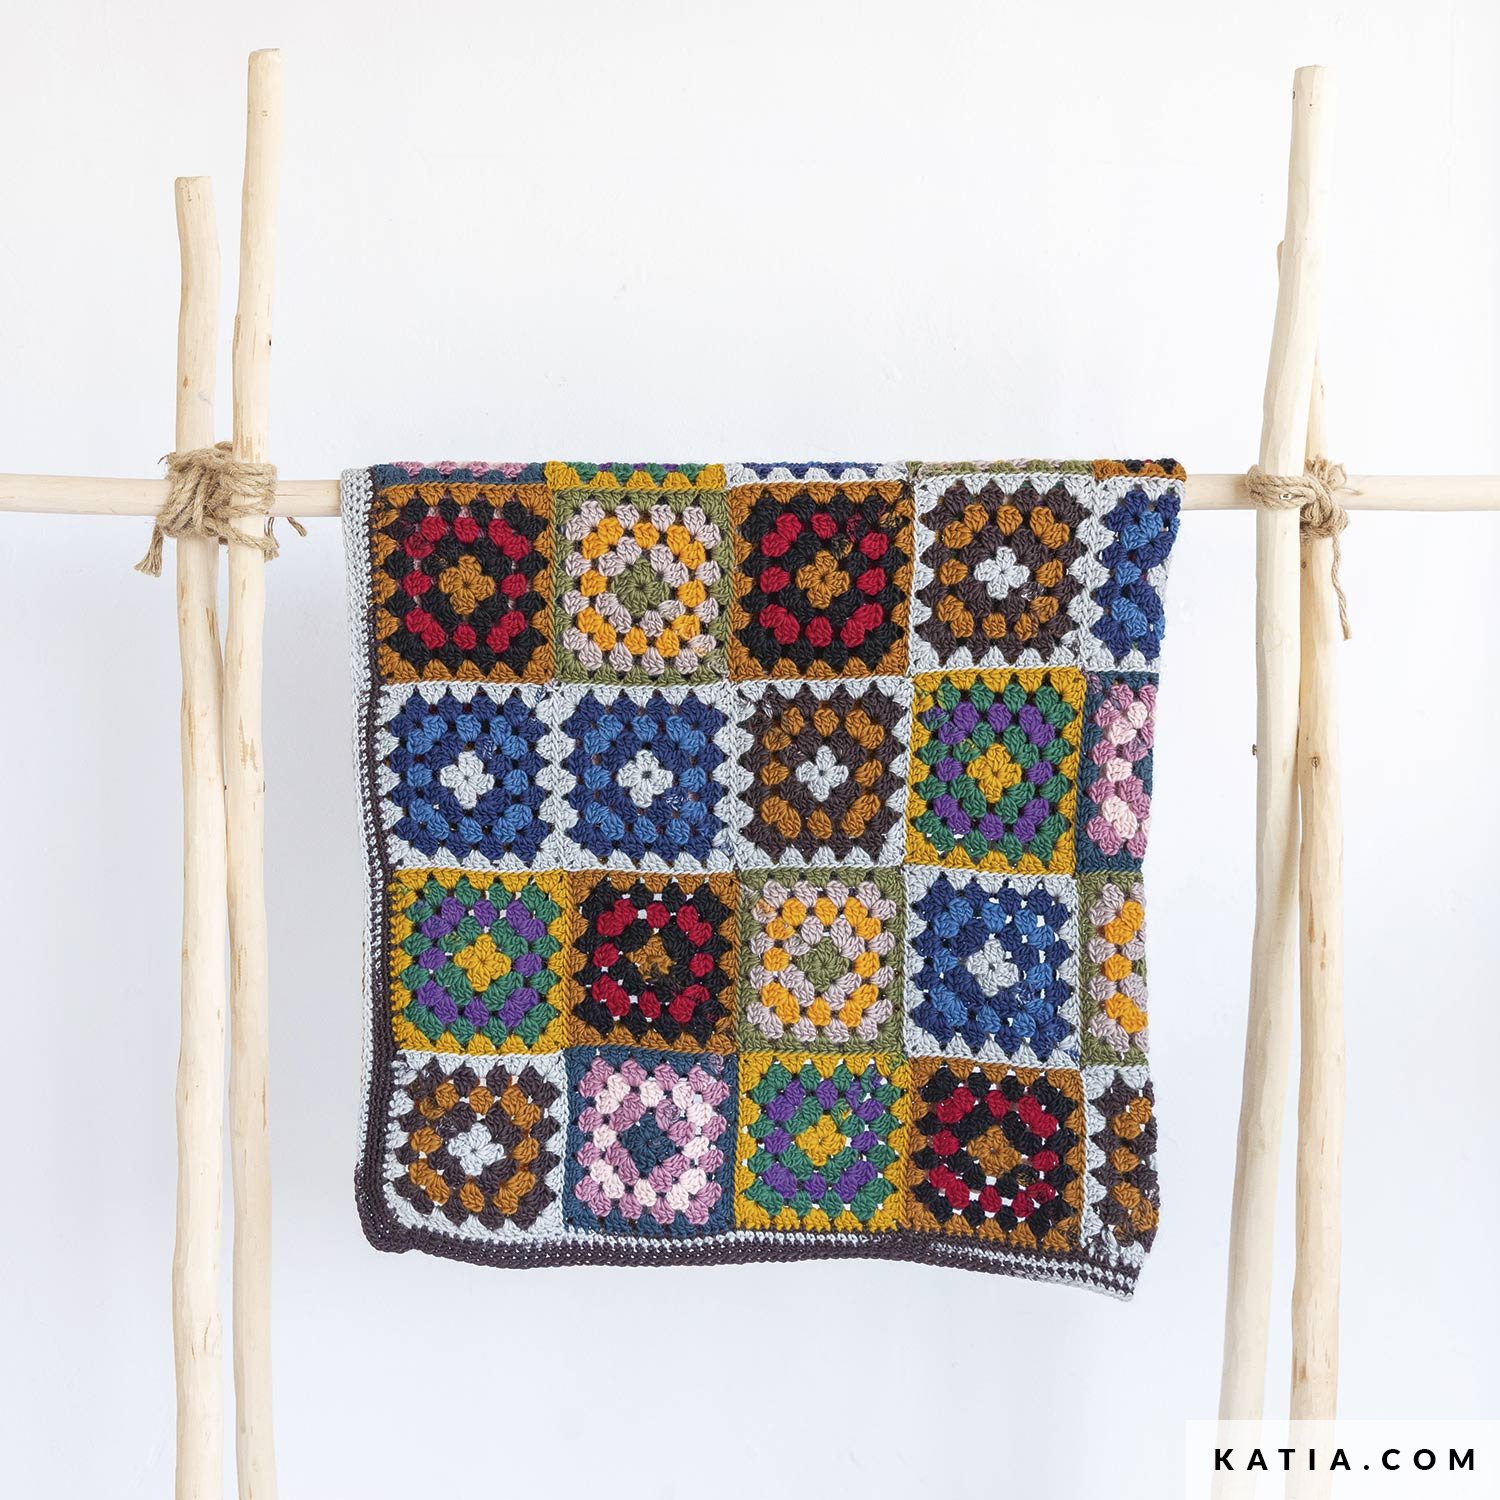 Free Granny Square Crochet Pattern: 4 Floral Motifs, cypress